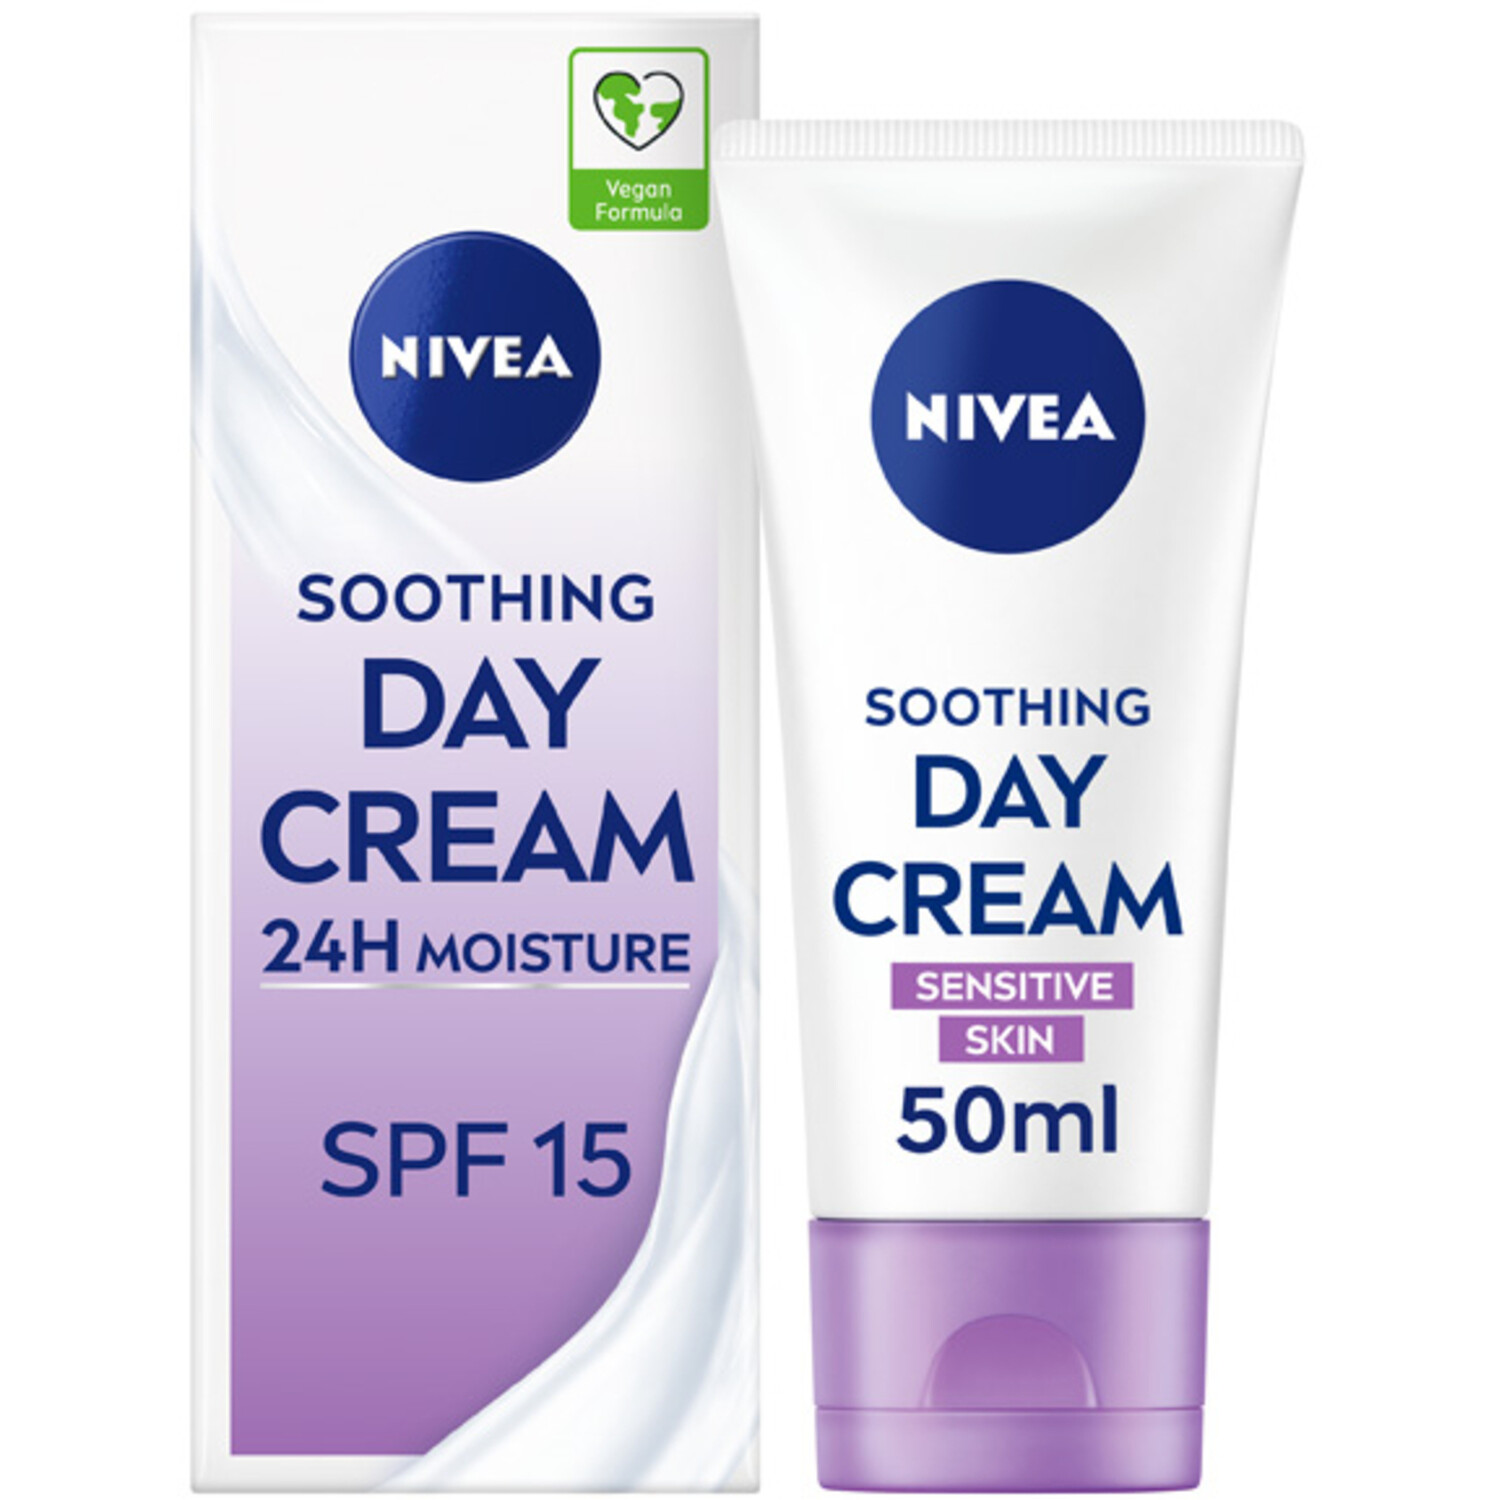 Nivea Soothing Day Cream 50ml - White Image